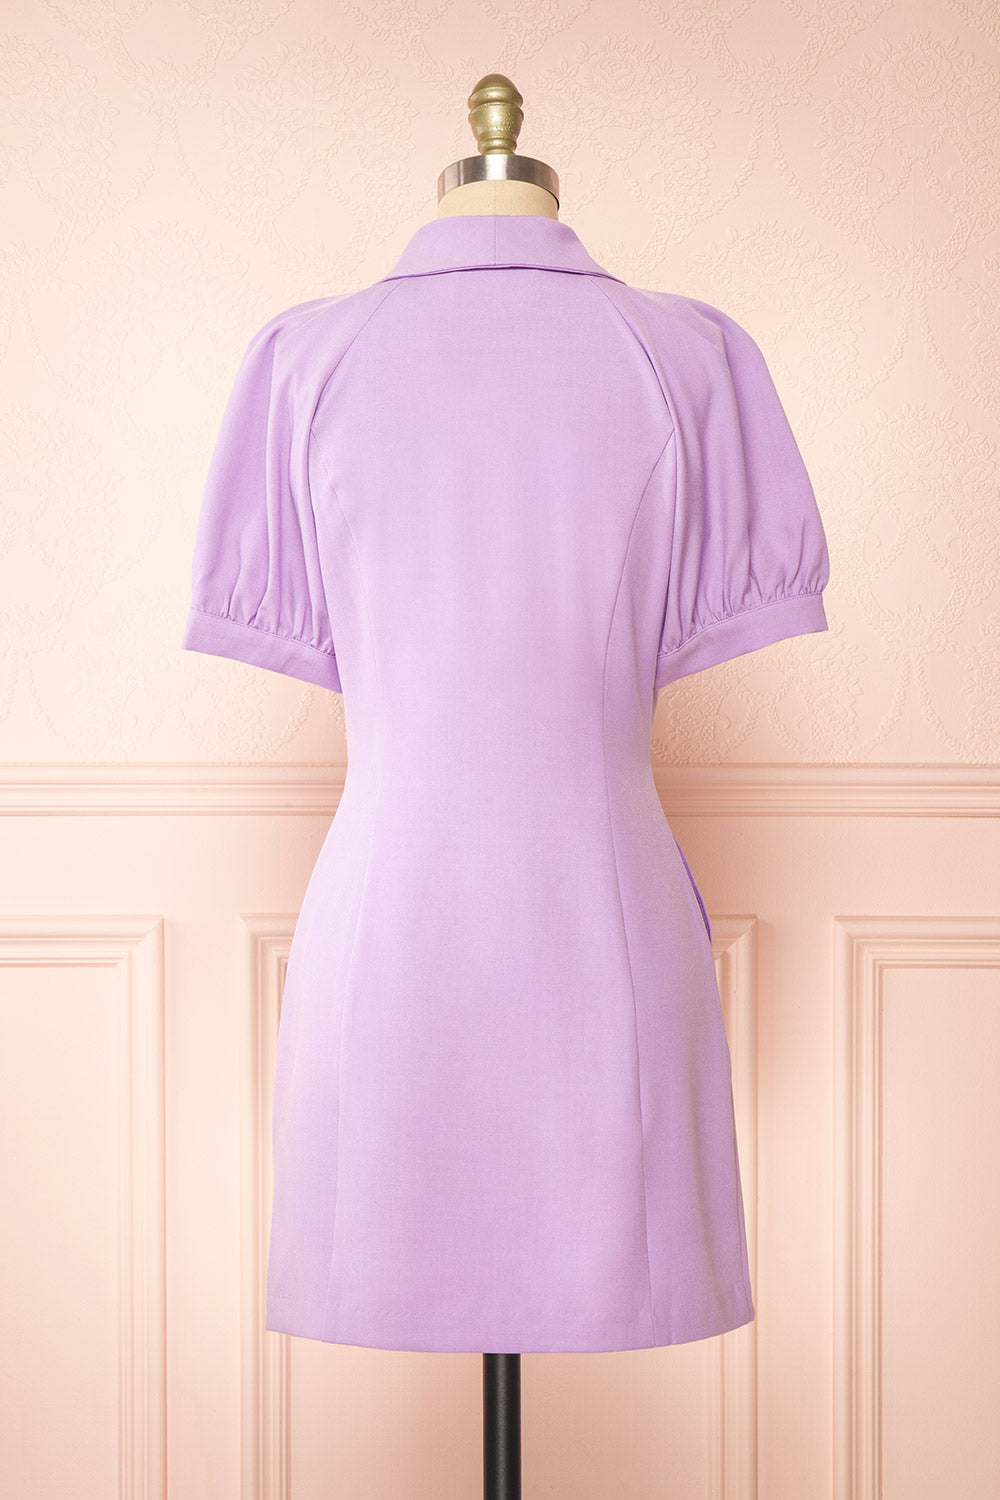 Lidie Short Lilac Tailored Dress | Boutique 1861 back view 